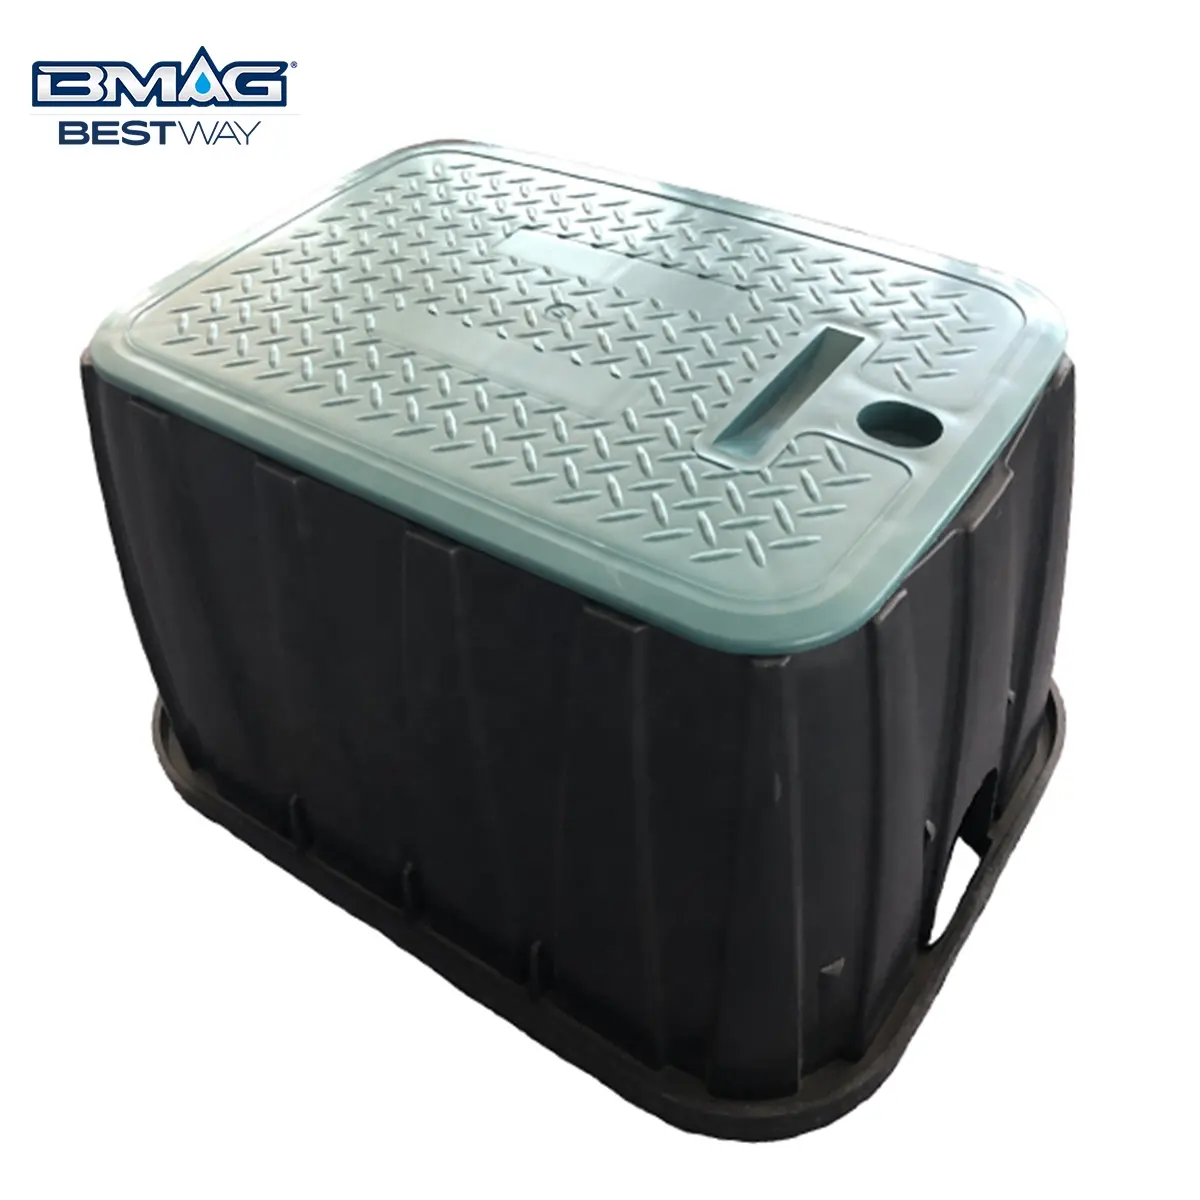 BWVA Ningbo Bestway L530 Plastic Water Meter Box With Manhole Cover